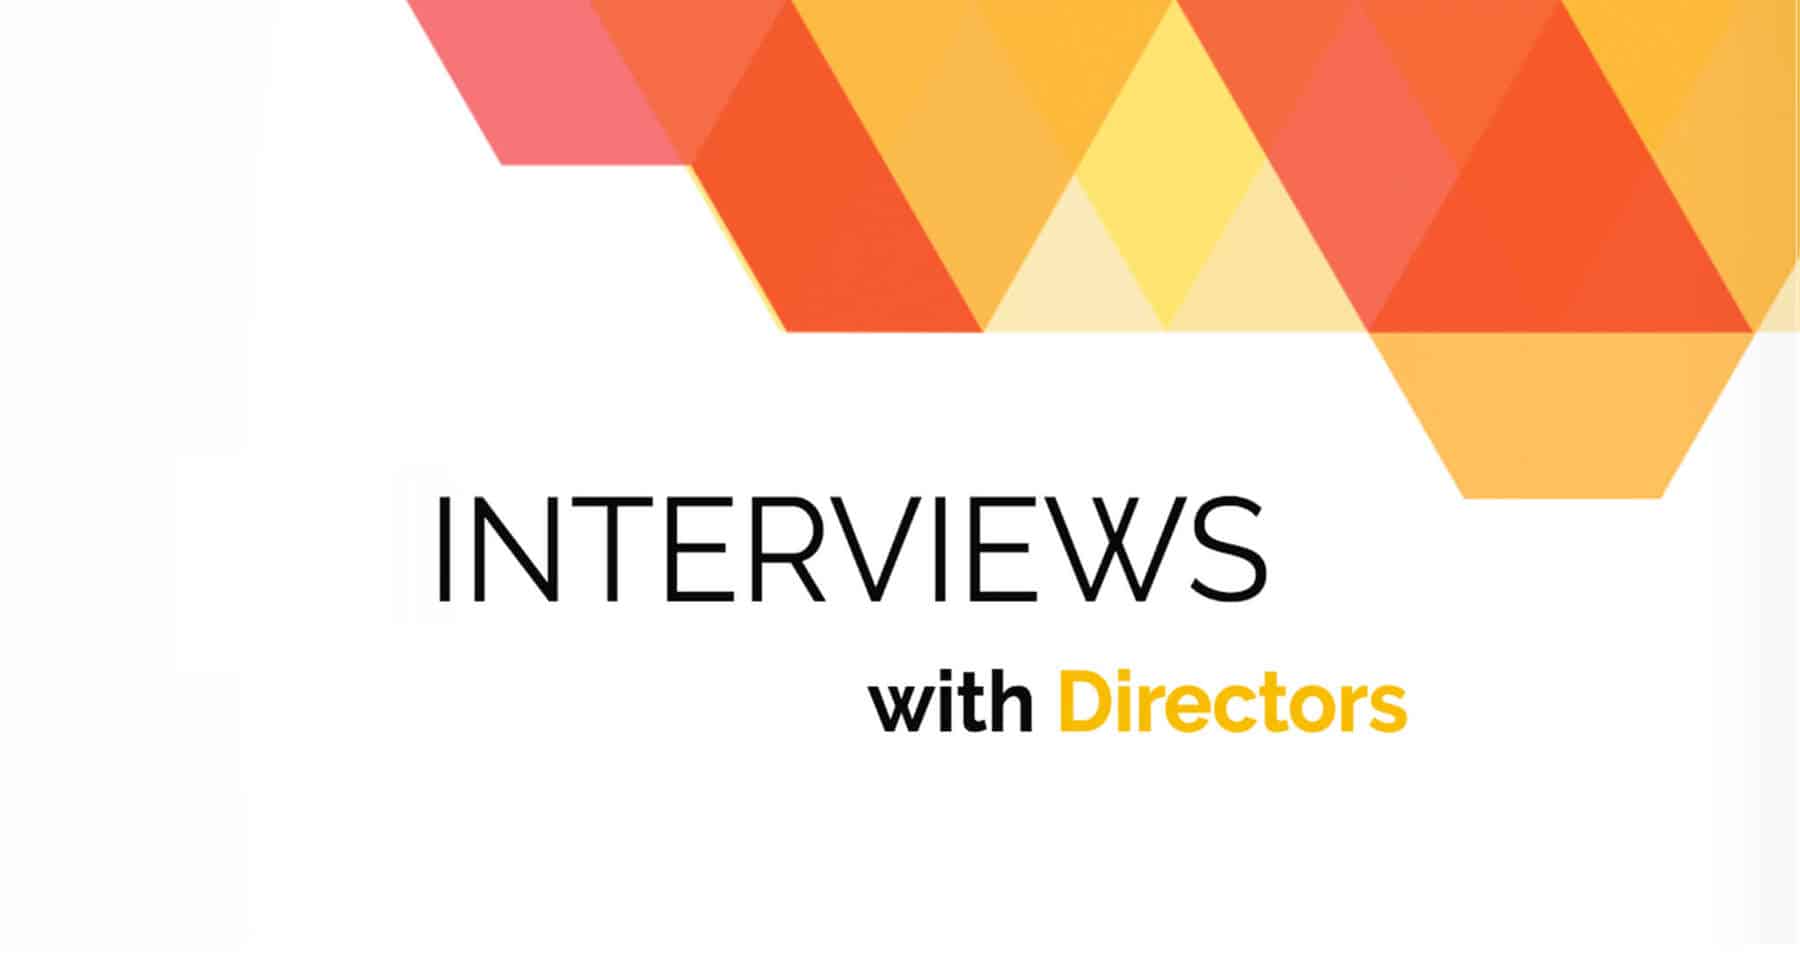 Interviews with Directors